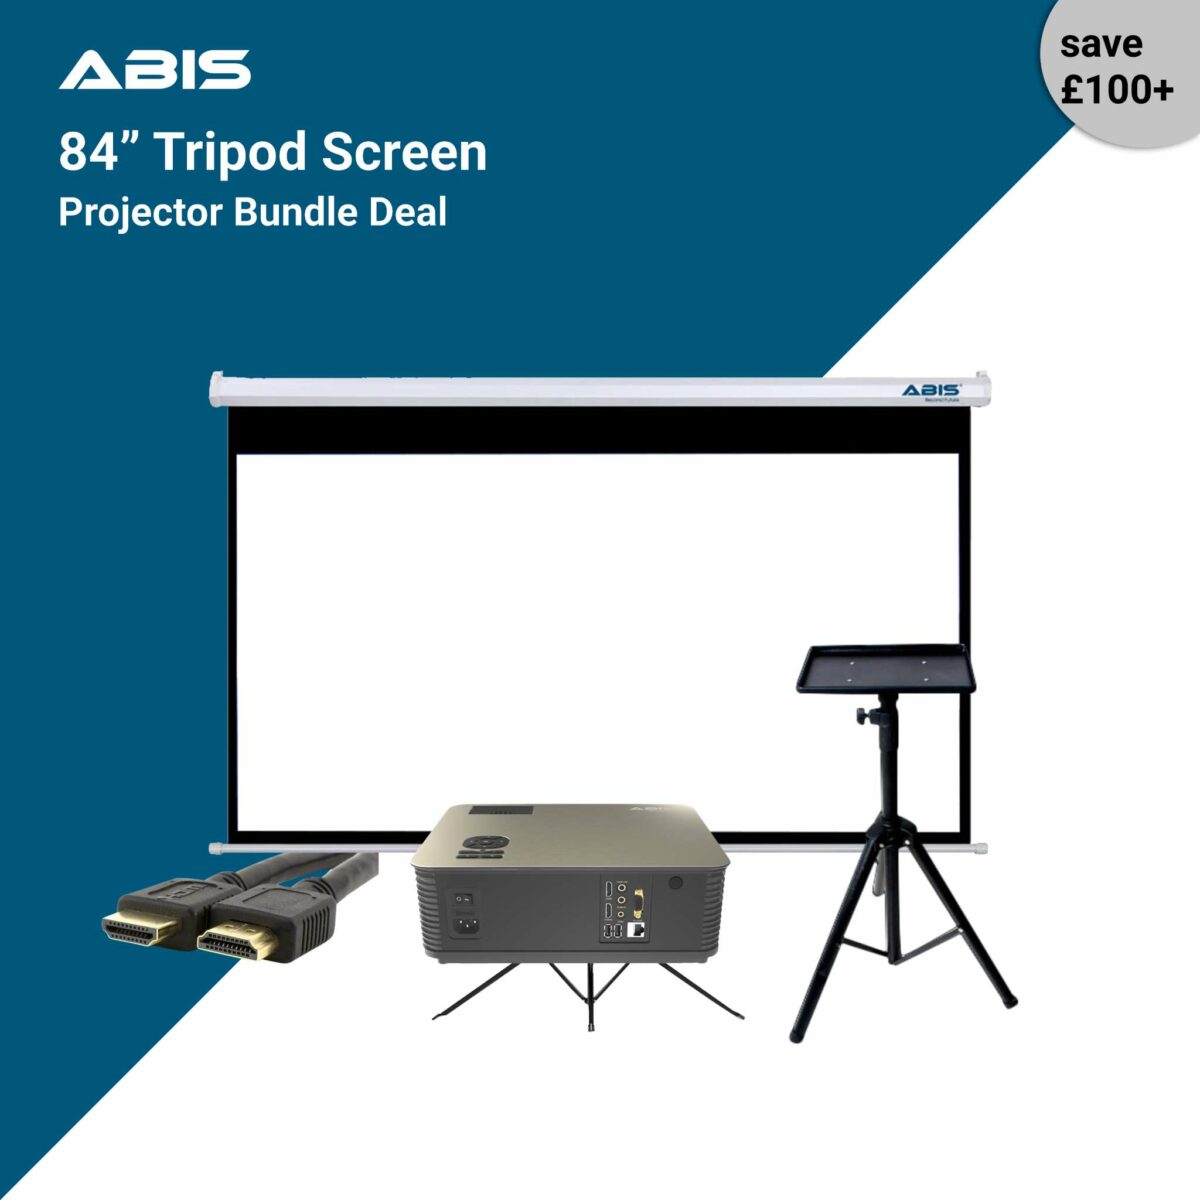 84” Tripod Projector Screen & Projector Bundle-Complete Set - ABIS